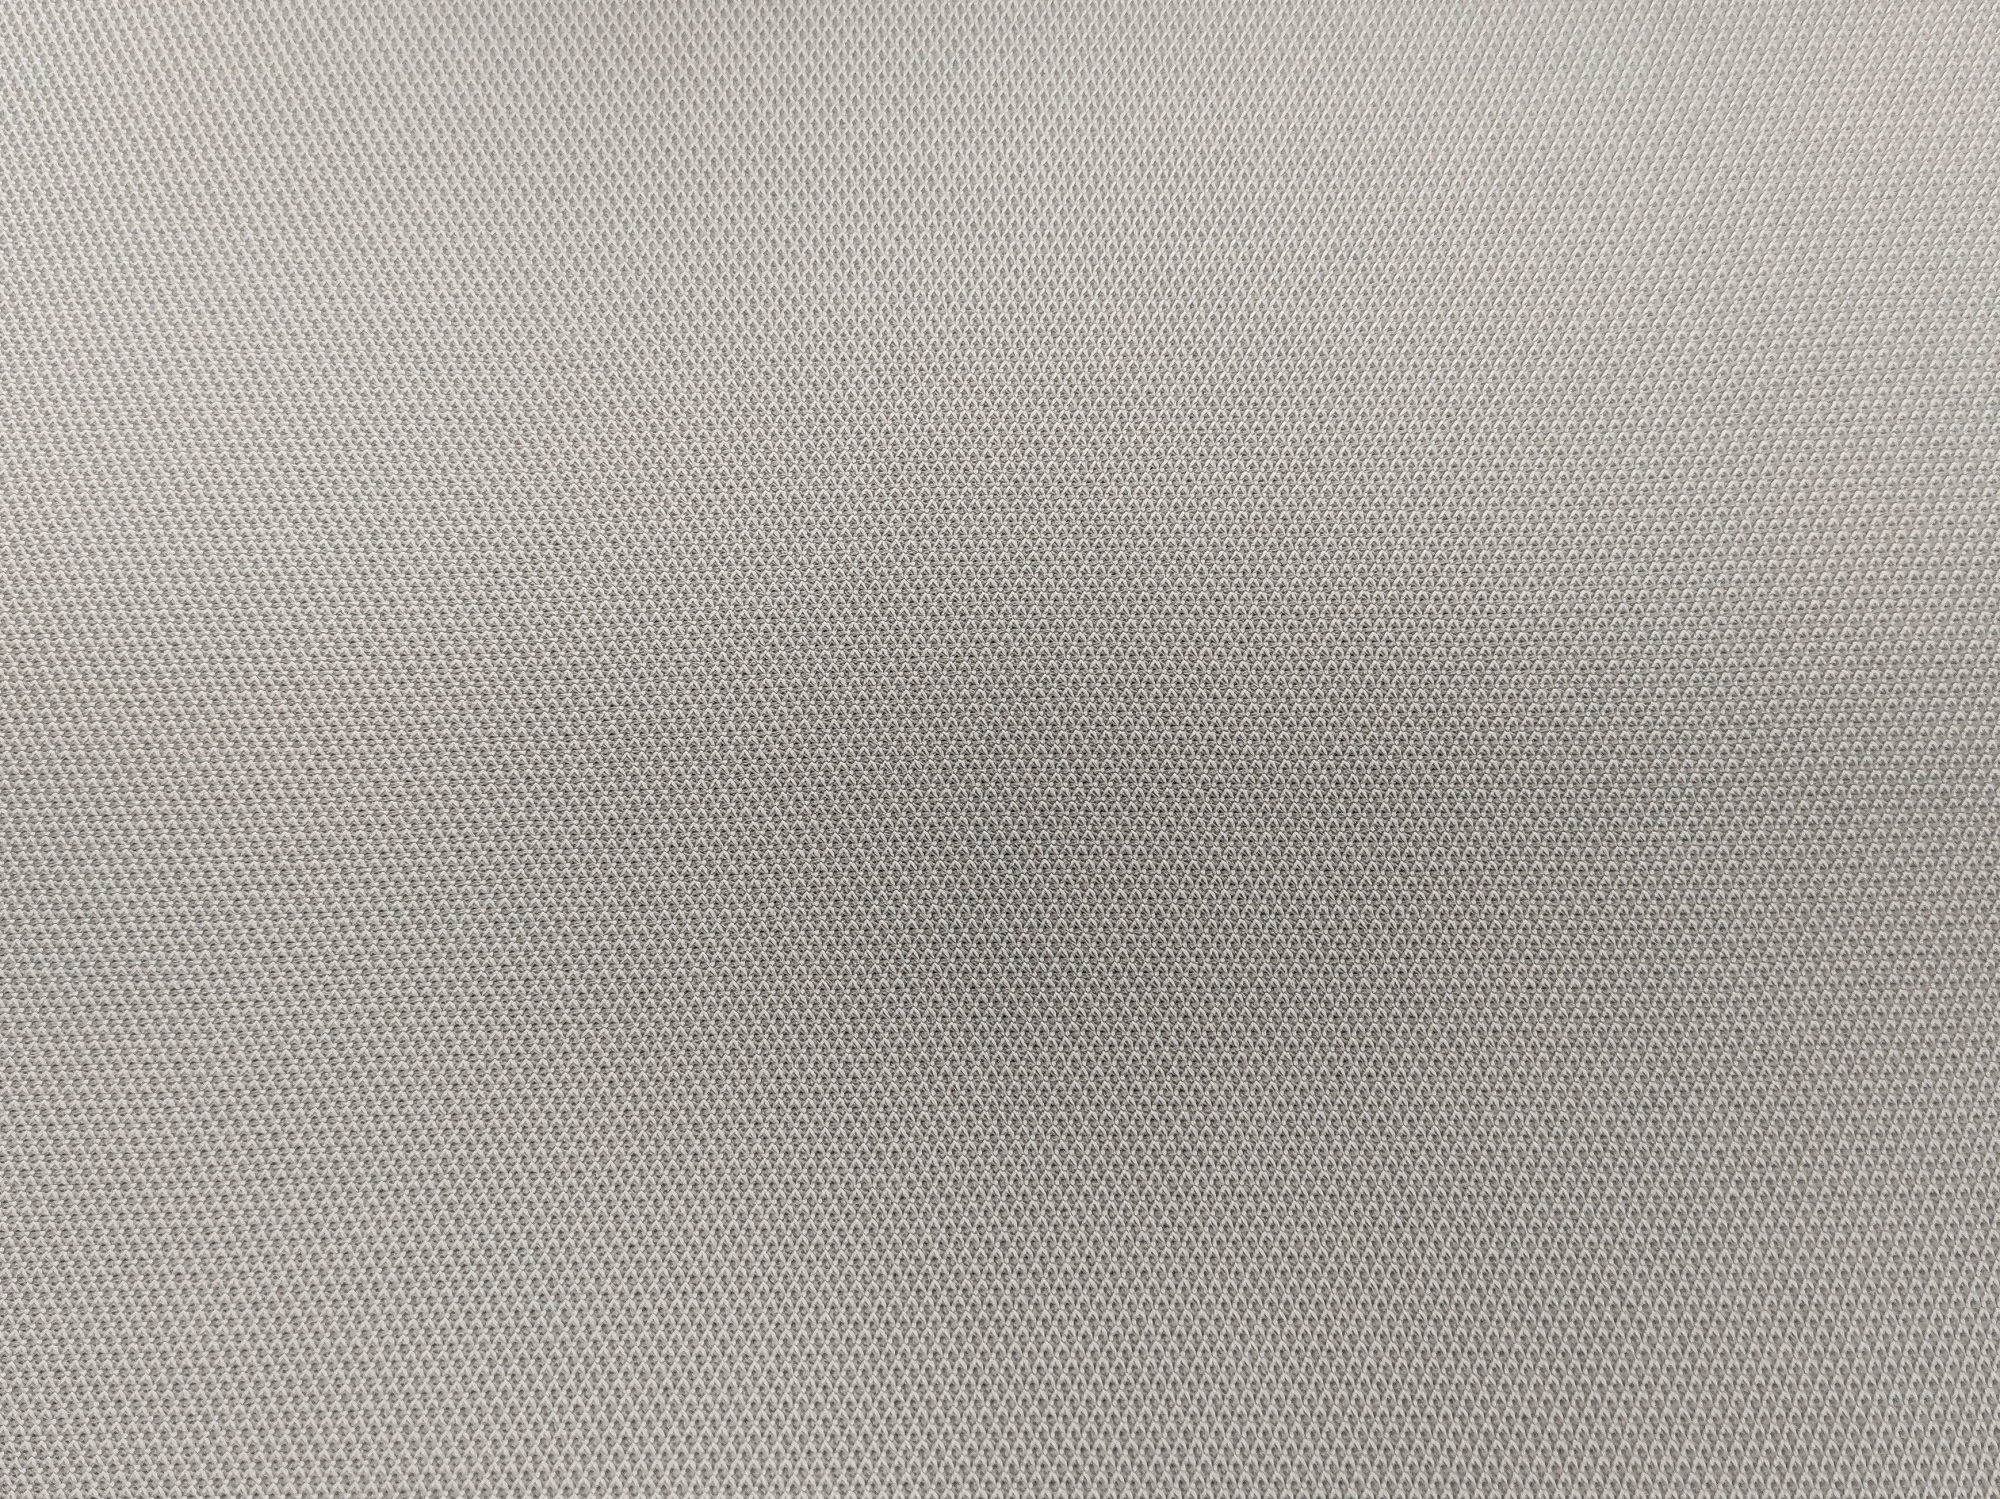 Autohimmelstoff Himmelstoff Dachhimmel G20-Technic Grey mit ca 3mm Schaum 